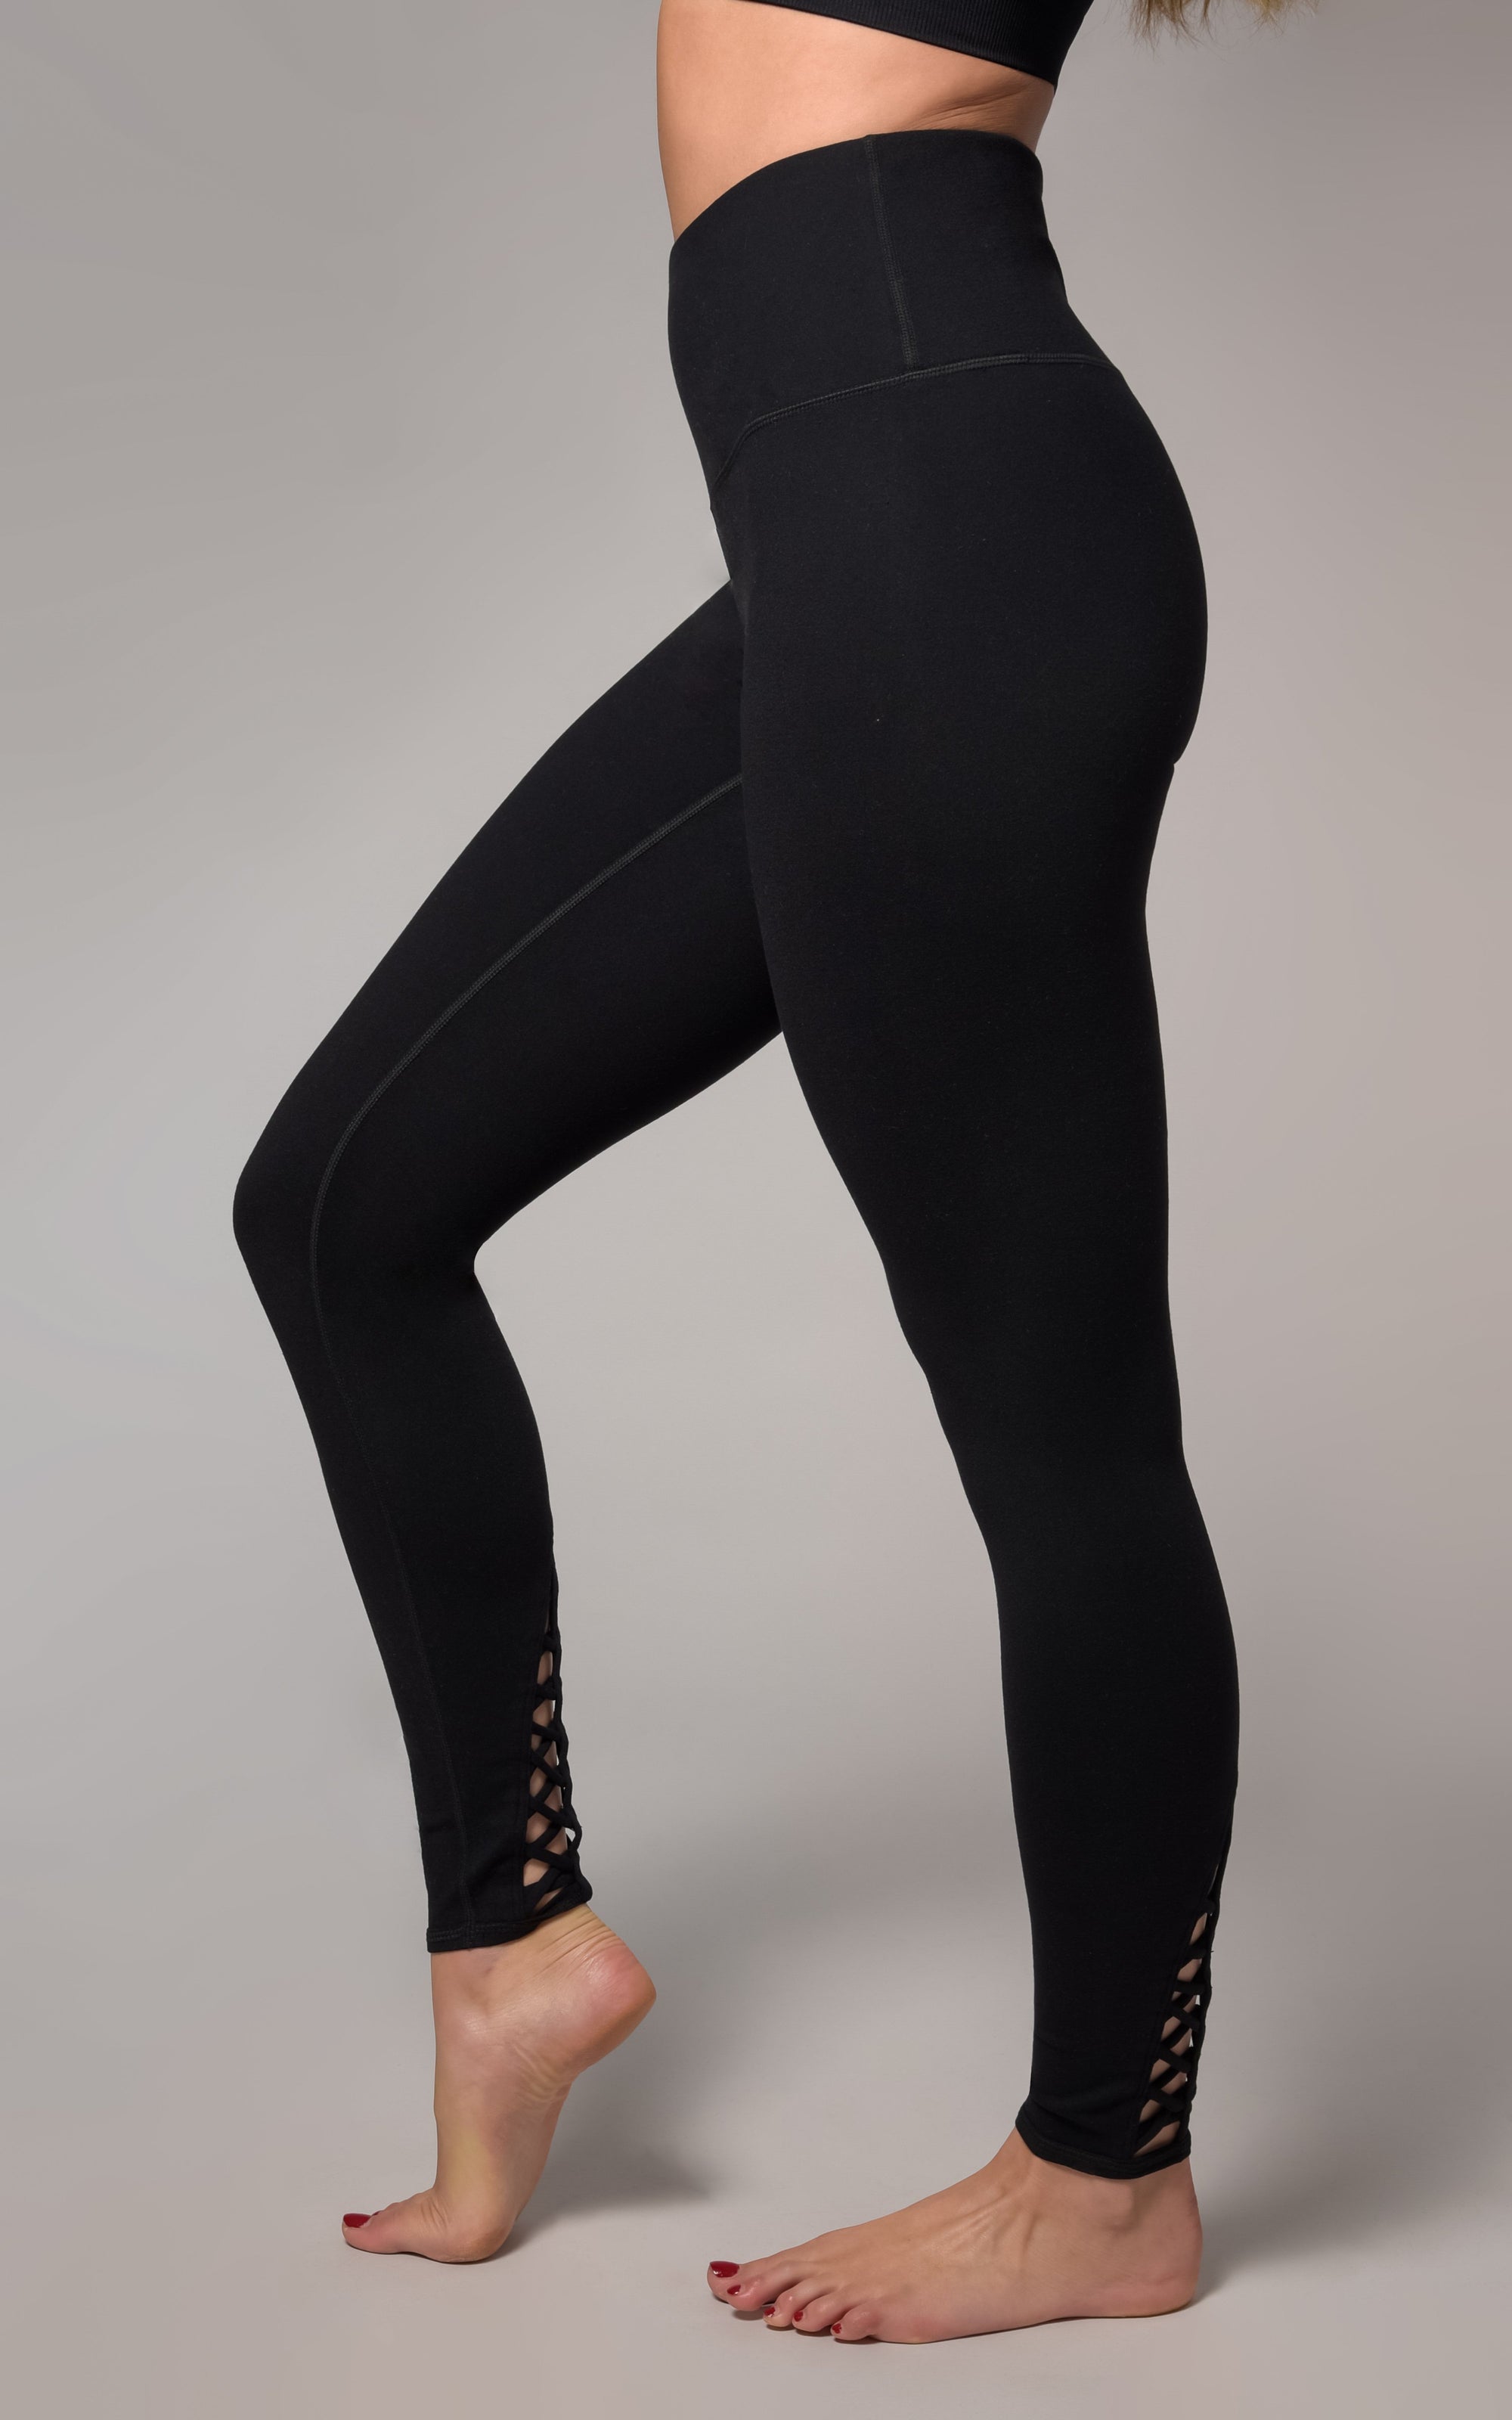 Black Criss-Cross 7/8-length Leggings by Chandra Yoga & Active Wear